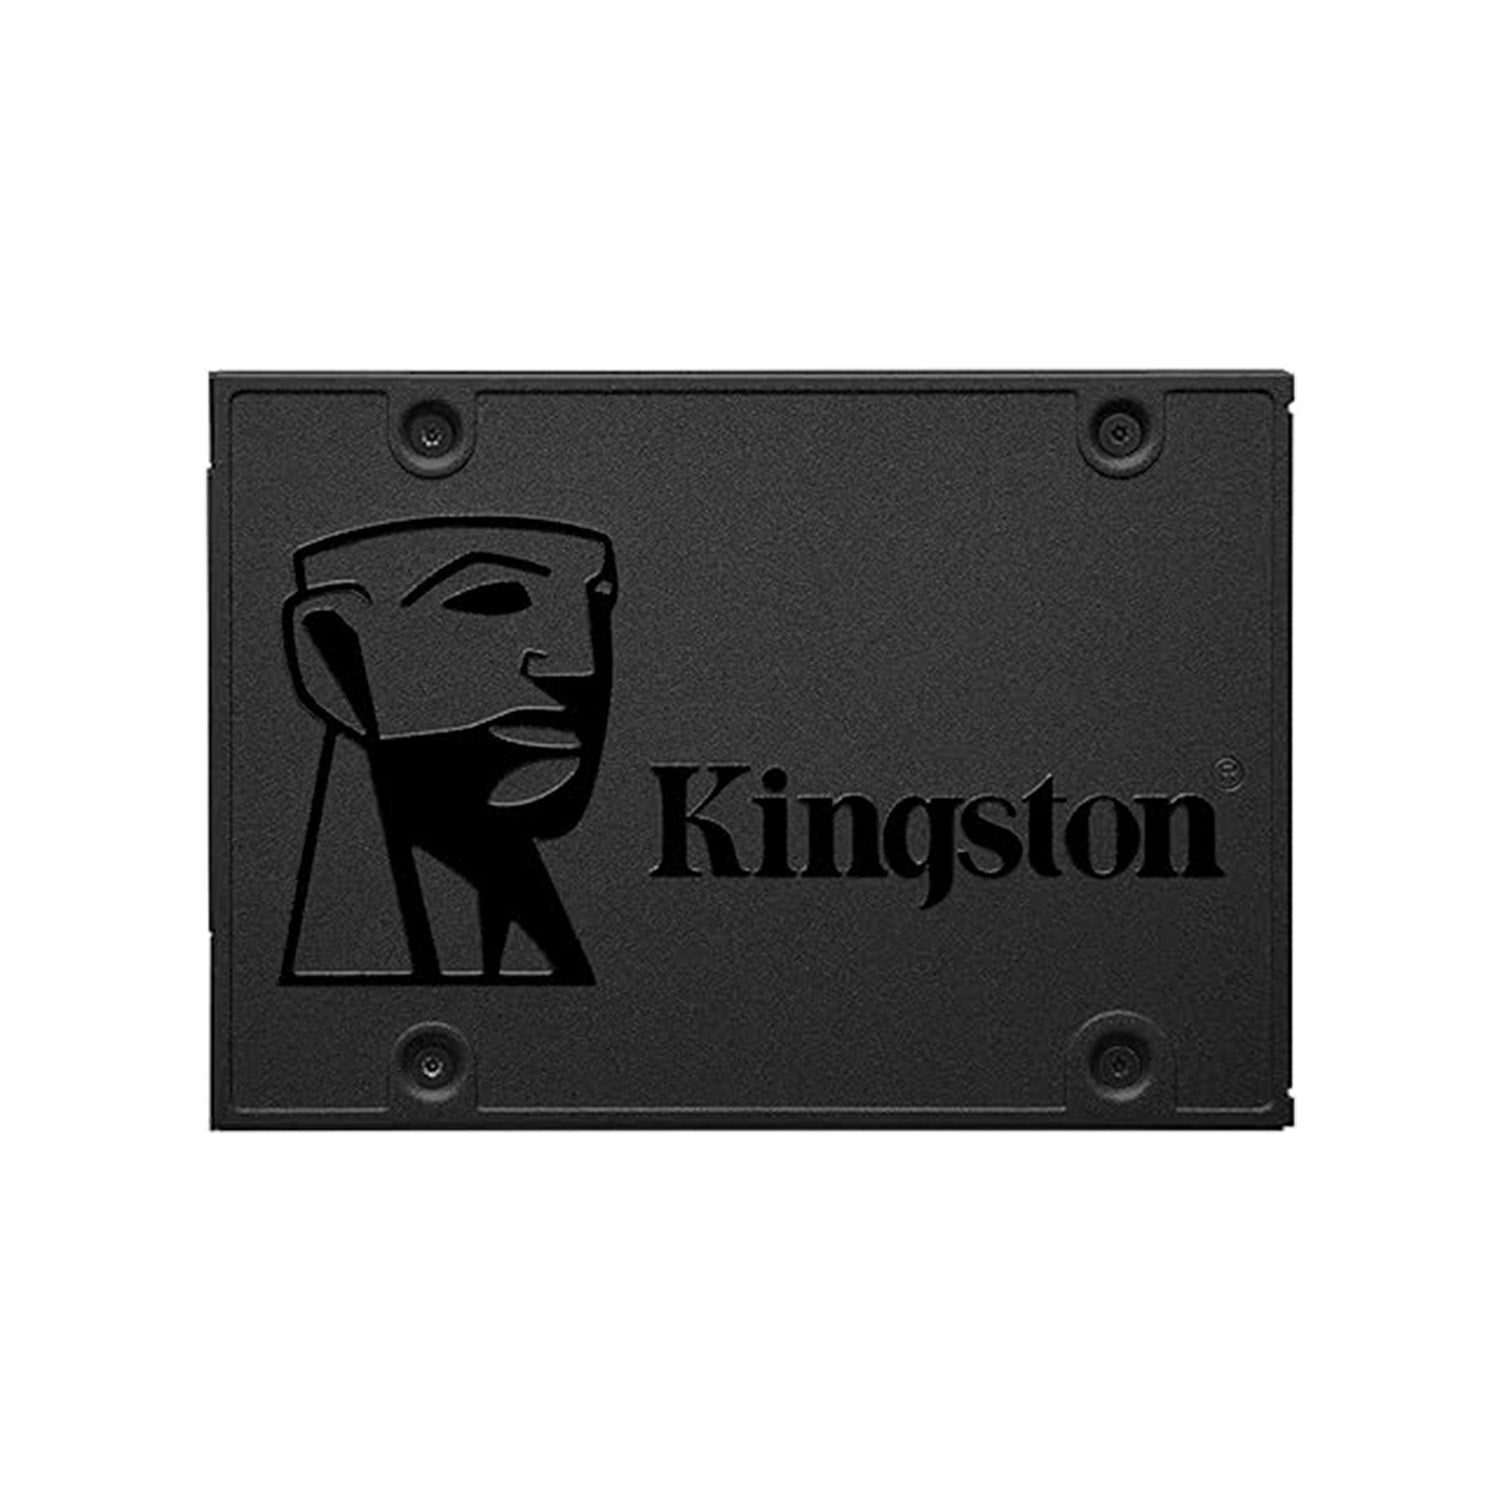 Kingston A400 SATA 3 2.5 inch Internal (Solid State Hard Drive) - 240GB SSD for Increase Performance, Laptop, Desktop (SA400S37/240G)